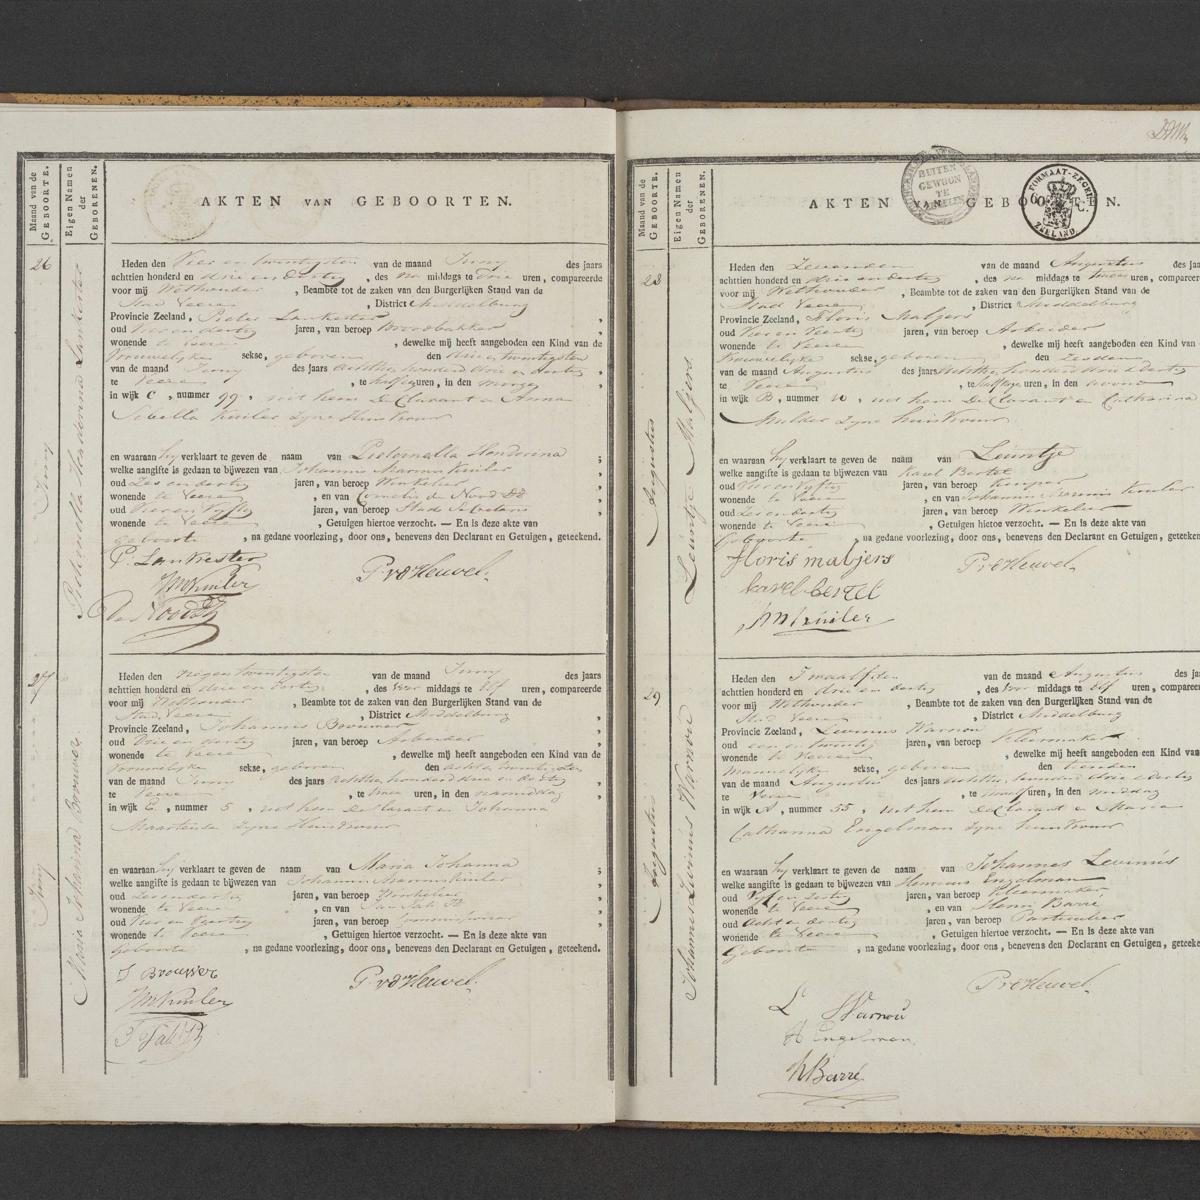 Civil registry of births, Veere, 1833, records 26-29